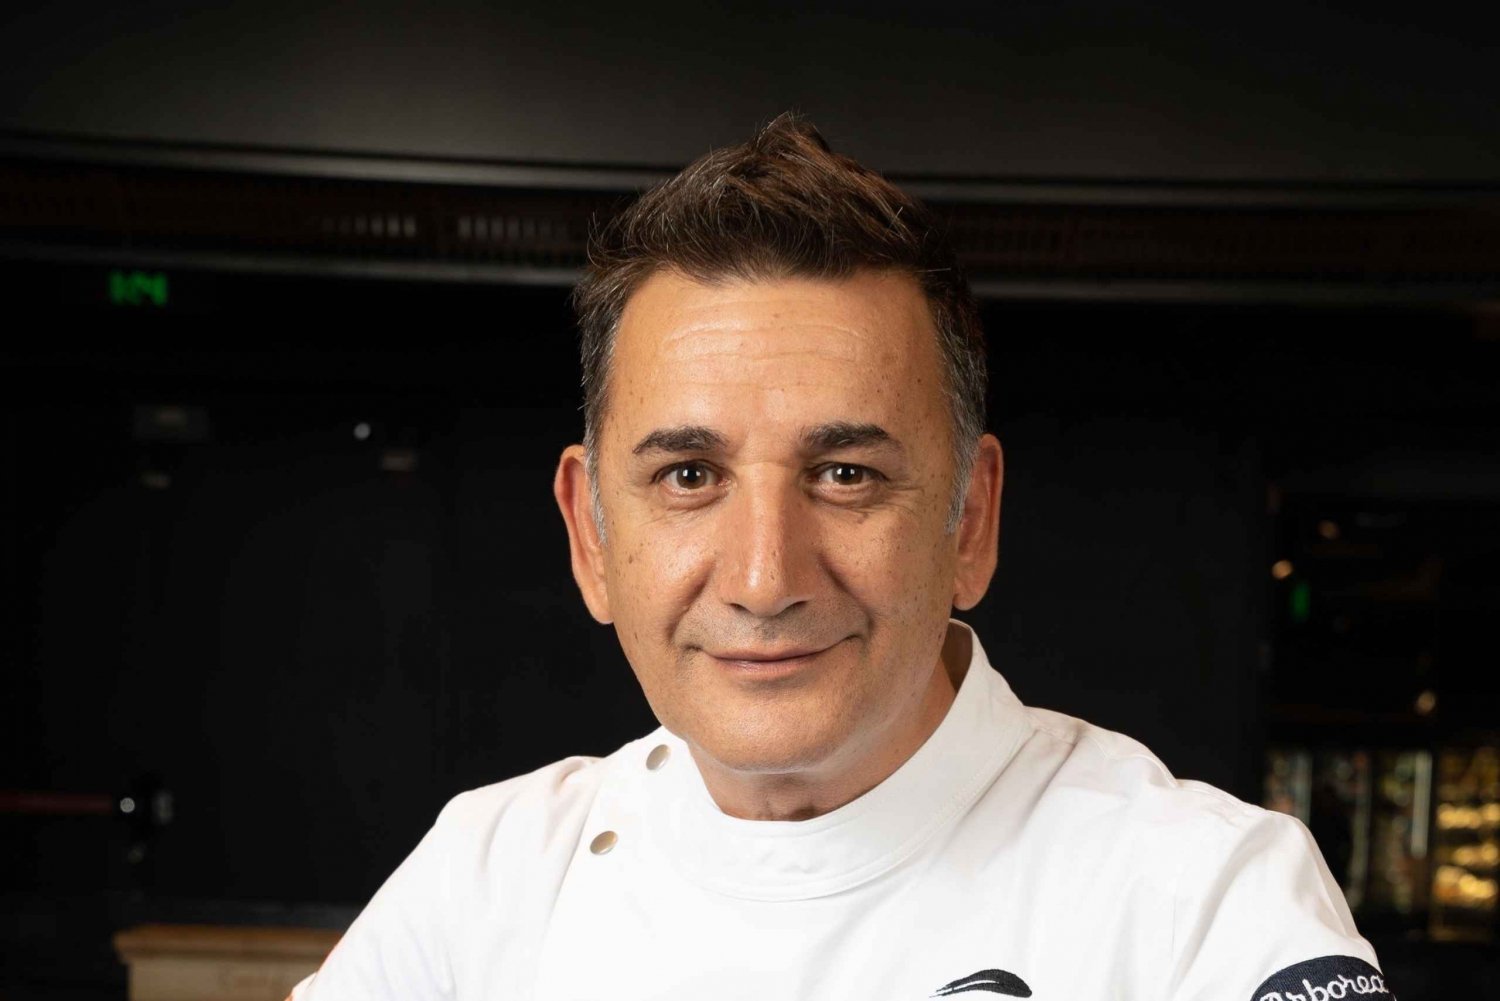 Catania: markttour en kookcursus met chef-kok Riccardo